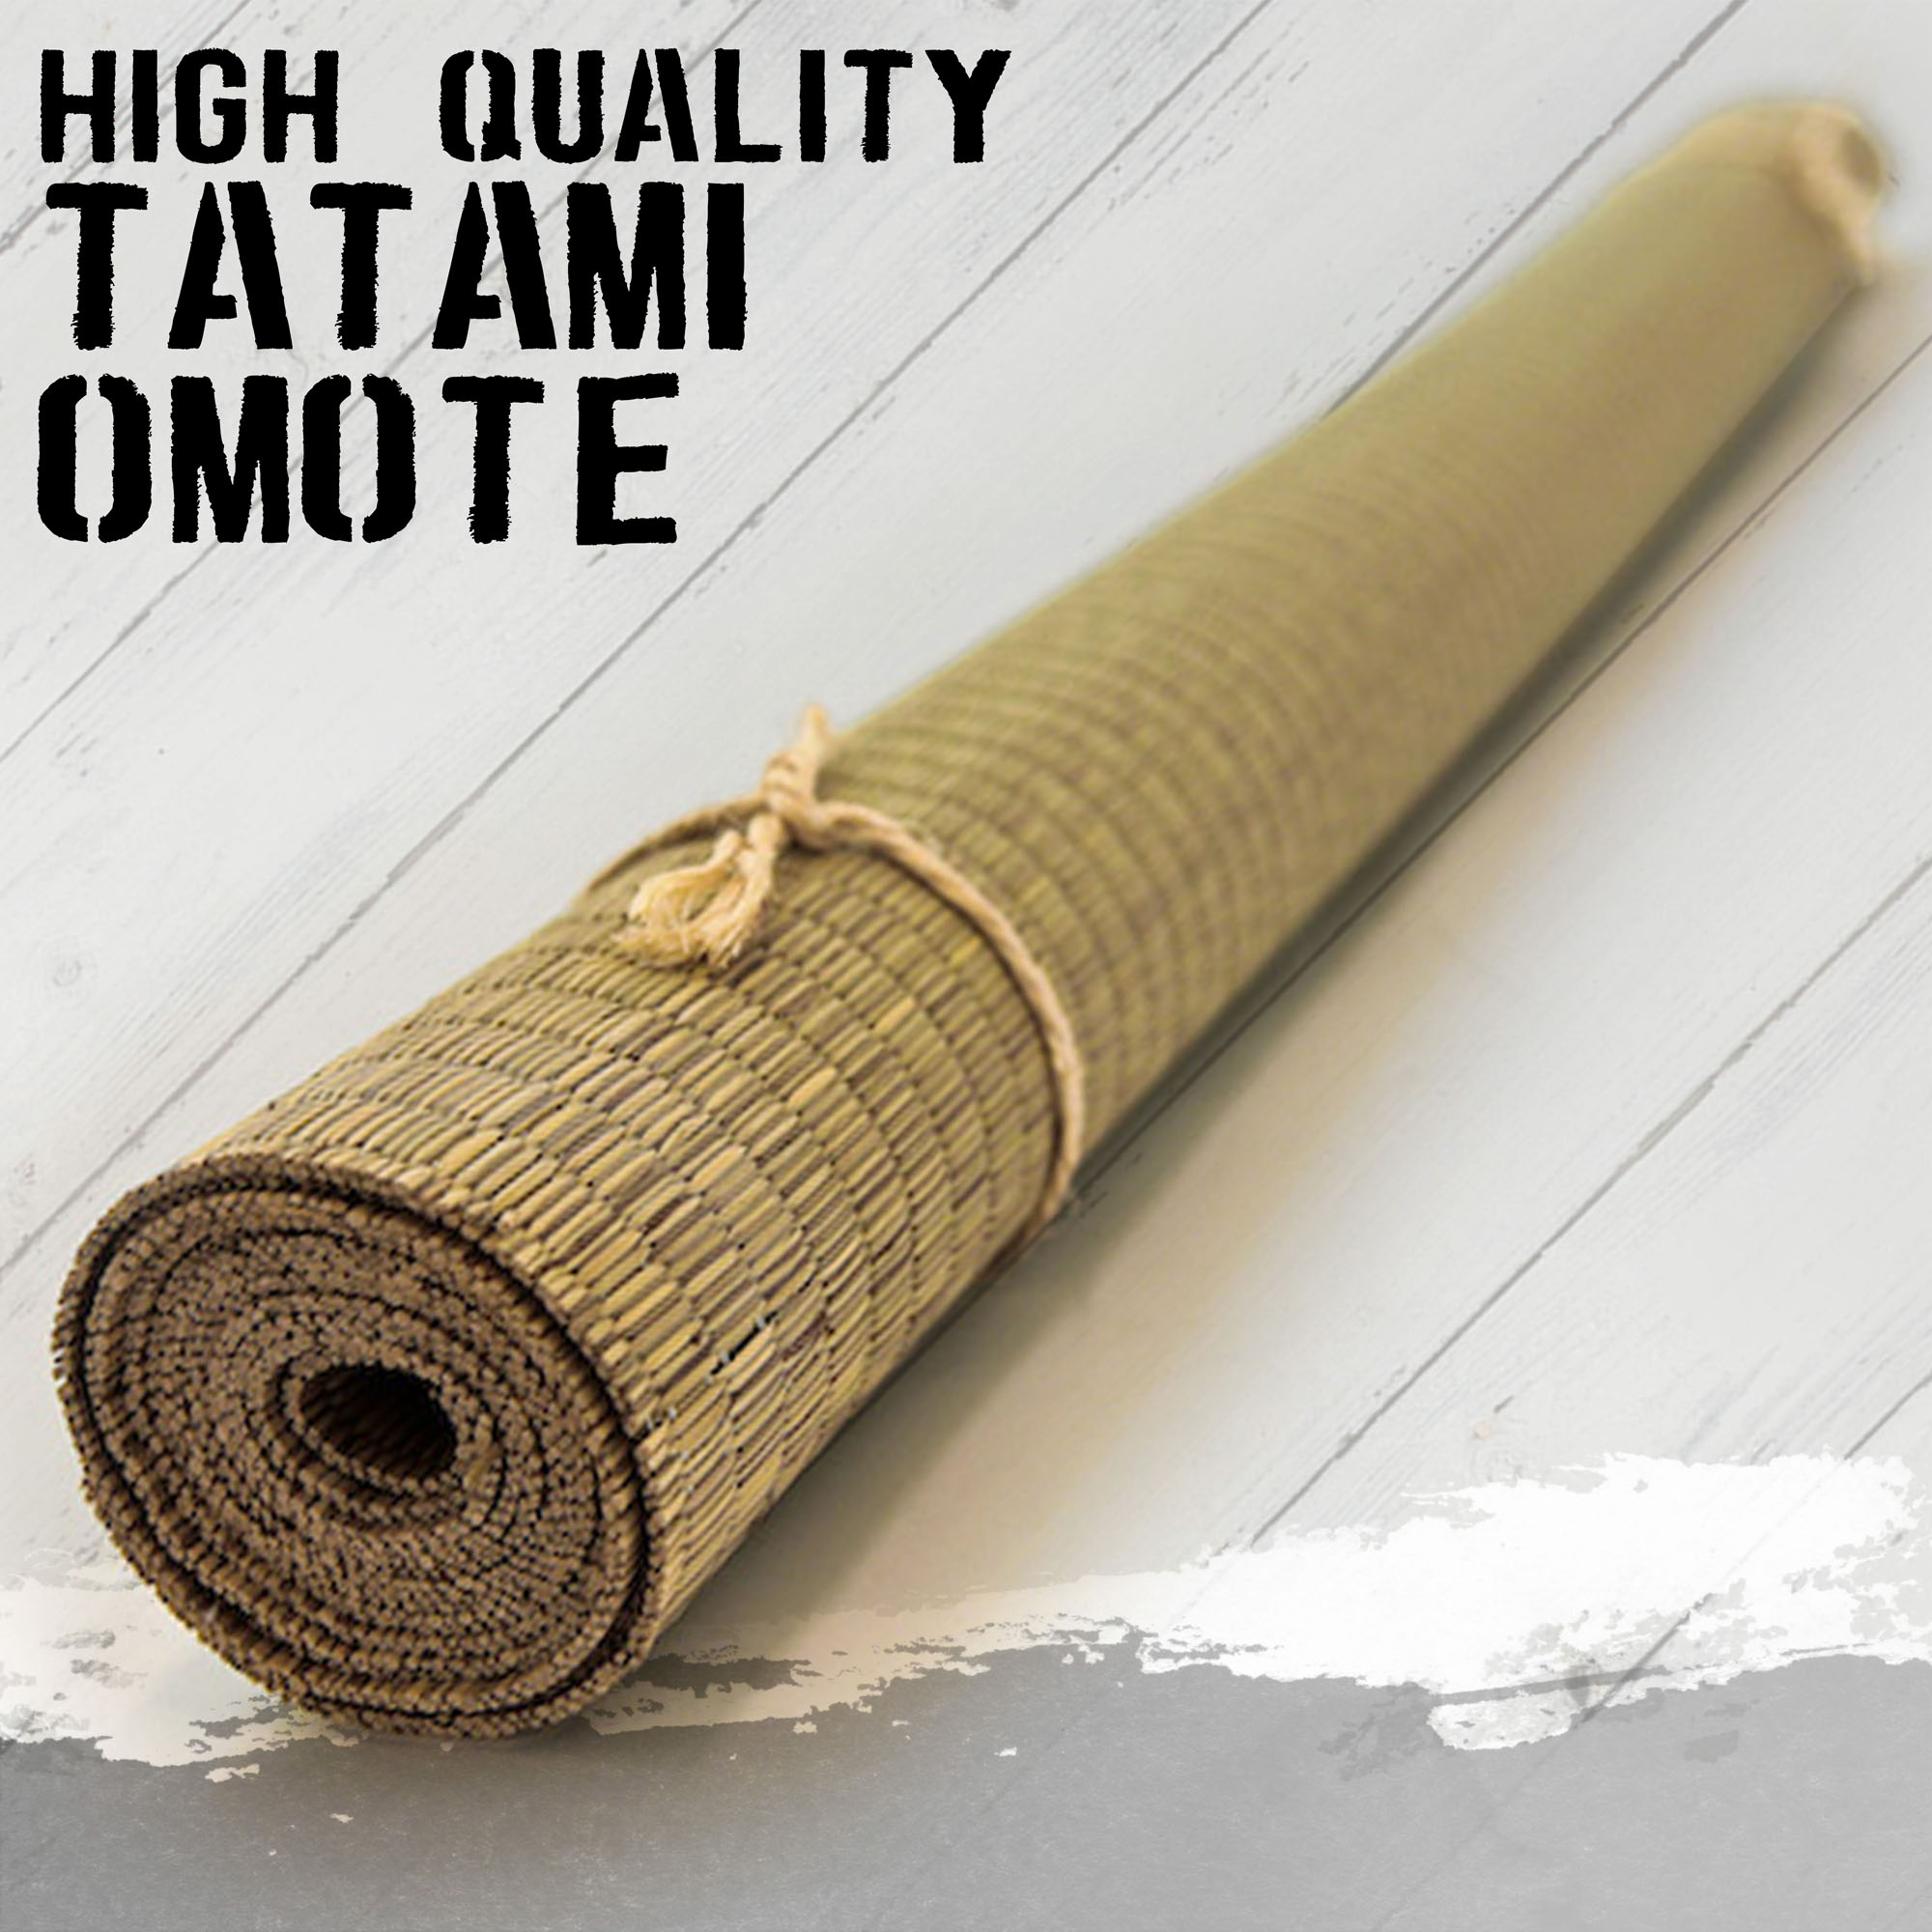 Tatami Omote - high quality - 20 pieces